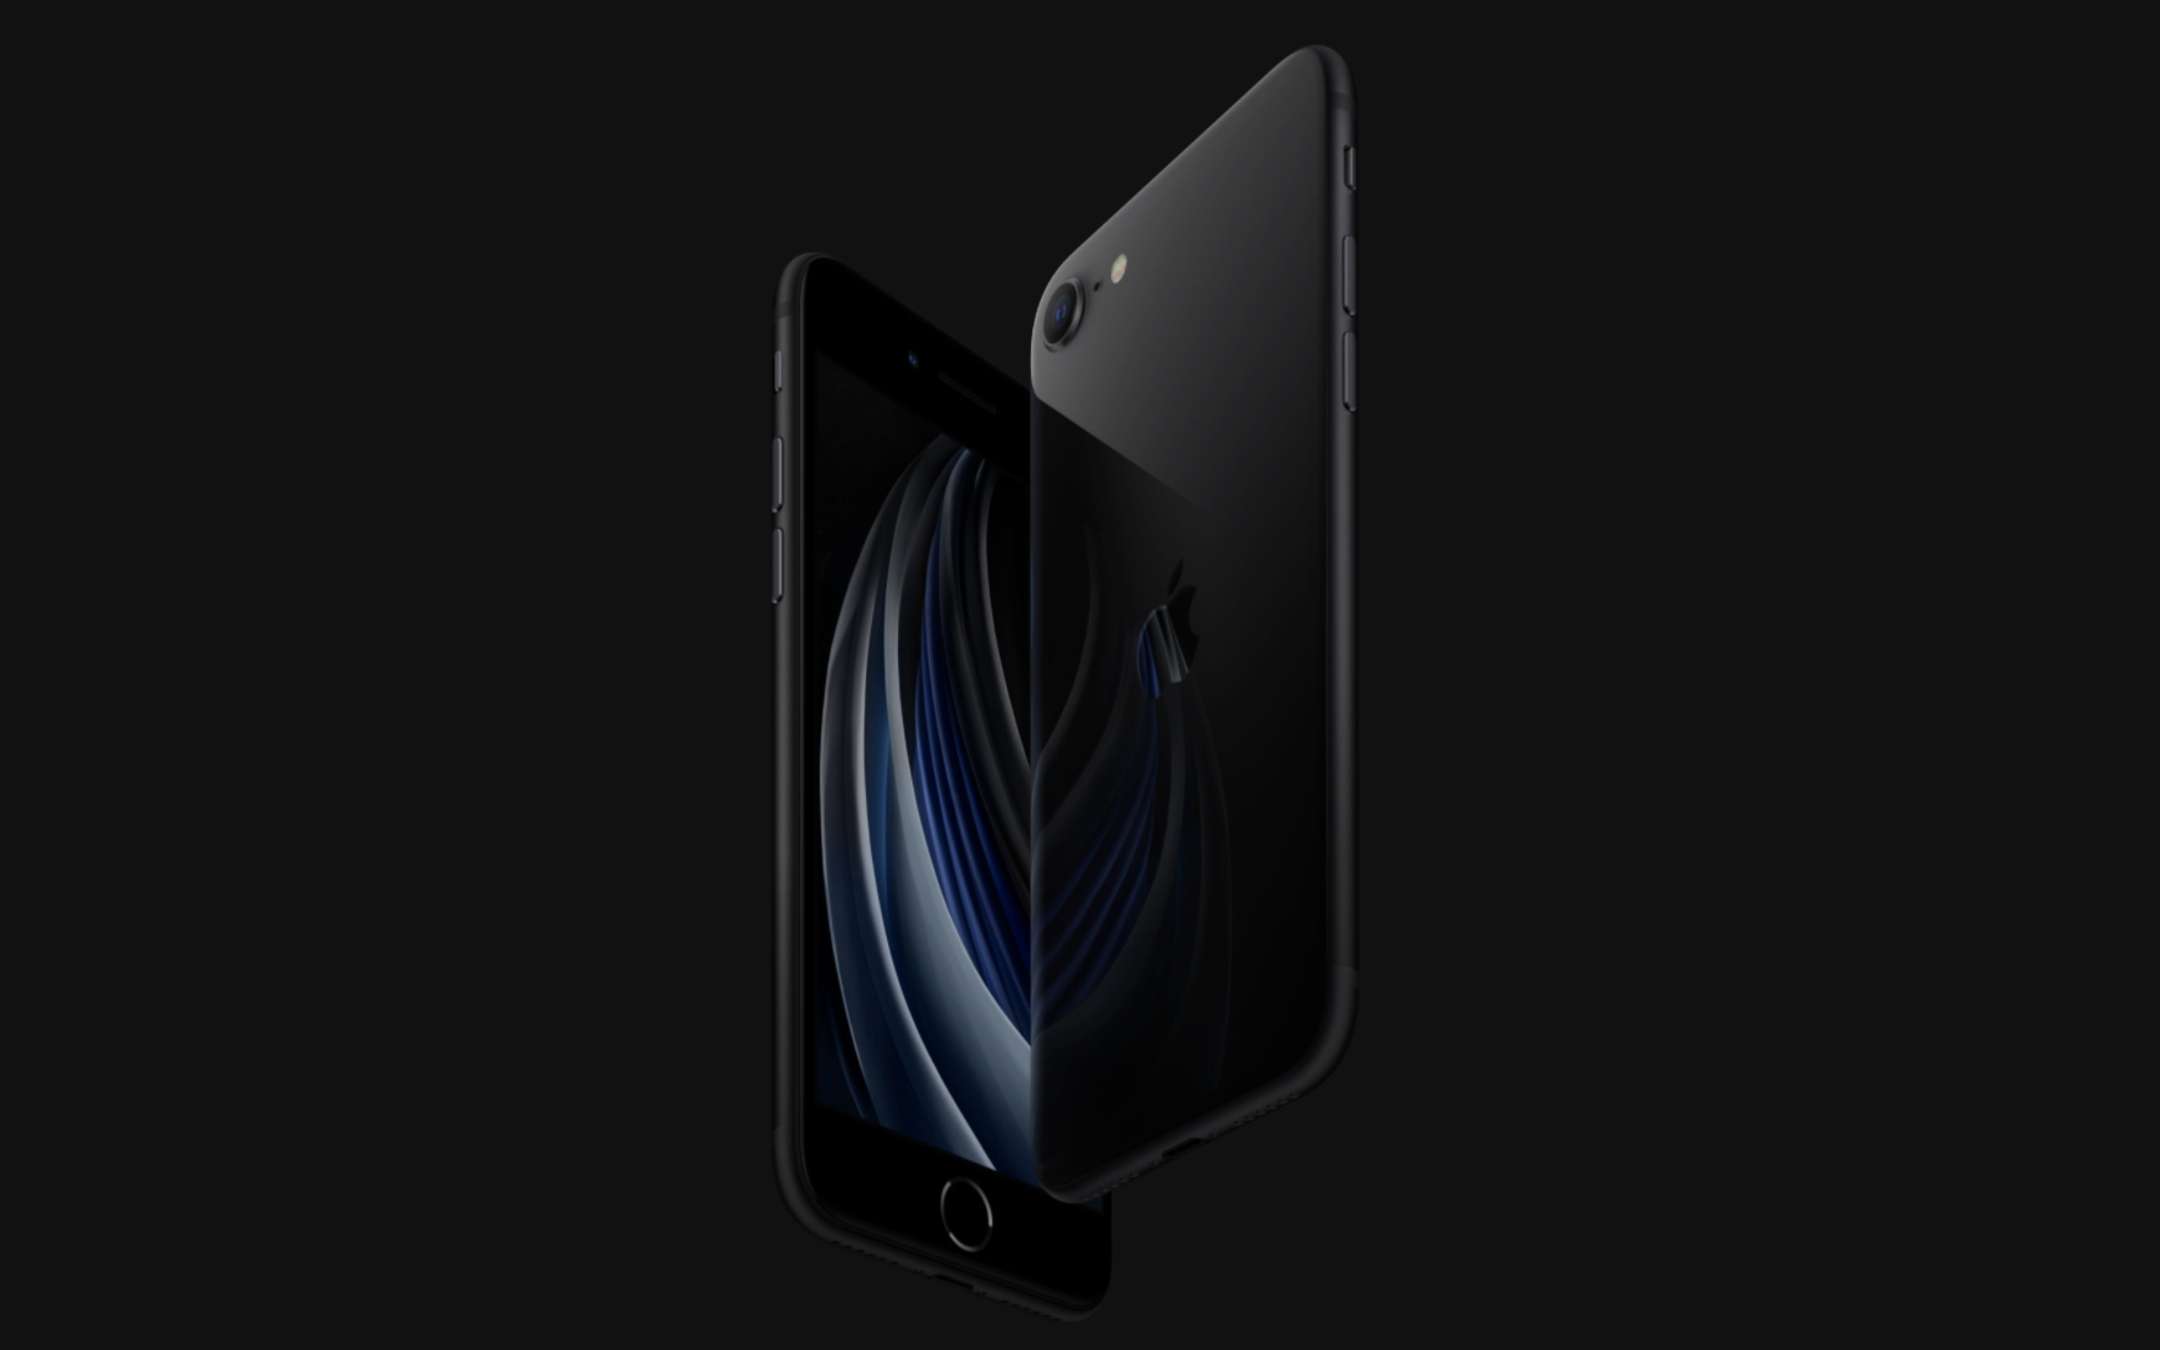 Apple iPhone SE Plus: per Kuo arriva nel 2021